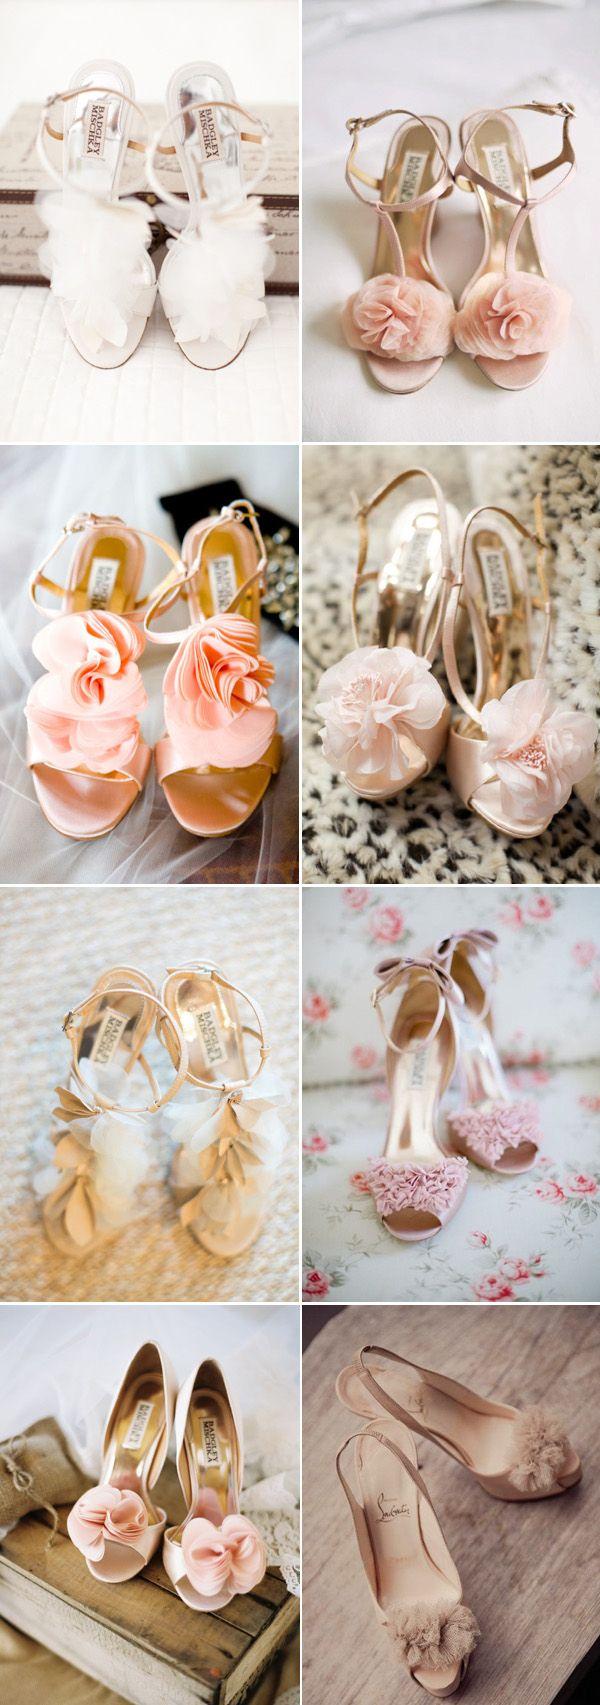 زفاف - 43 Most Wanted Wedding Shoes For Bride